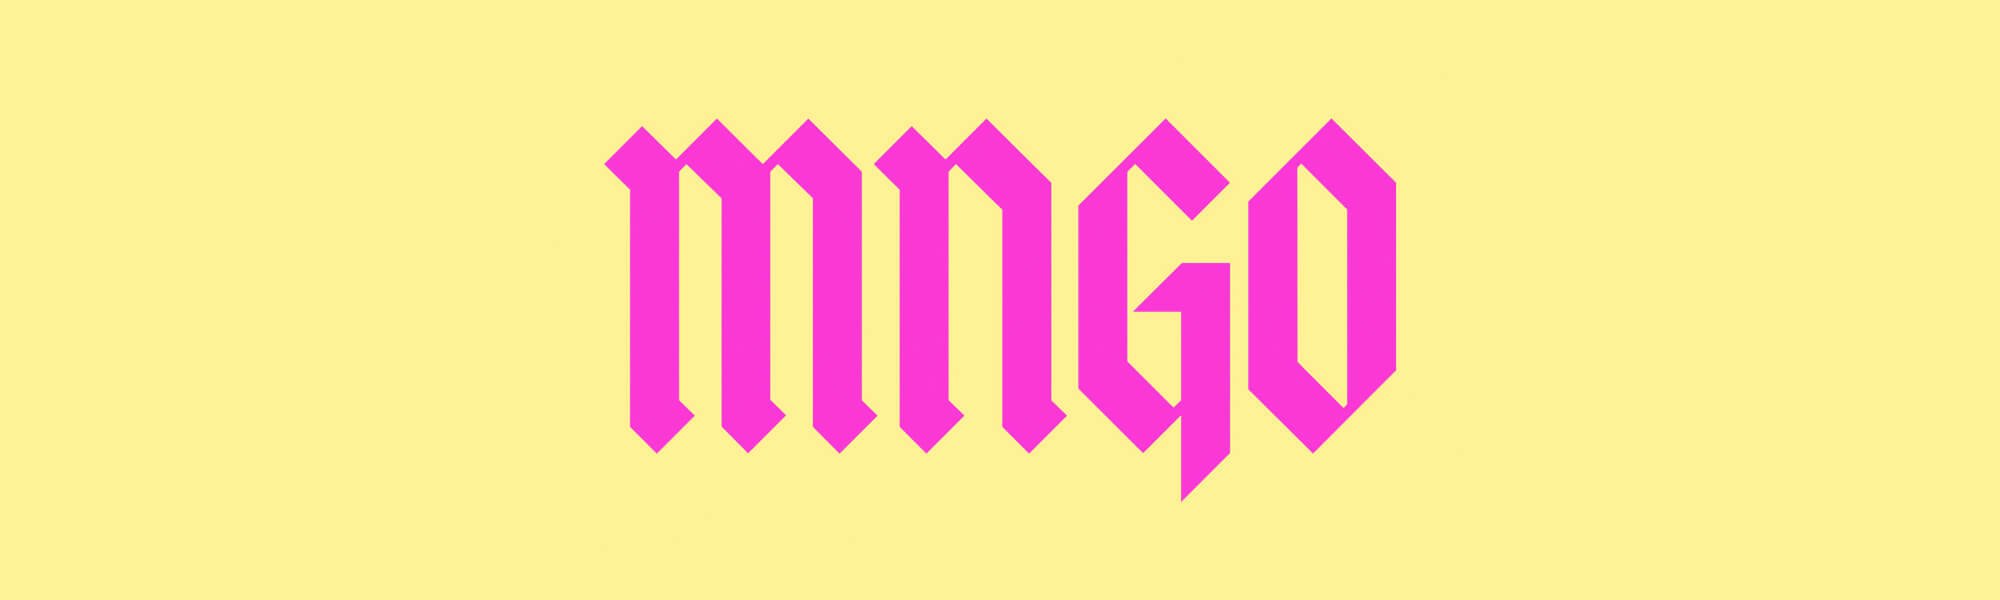 M.N.G.O banner